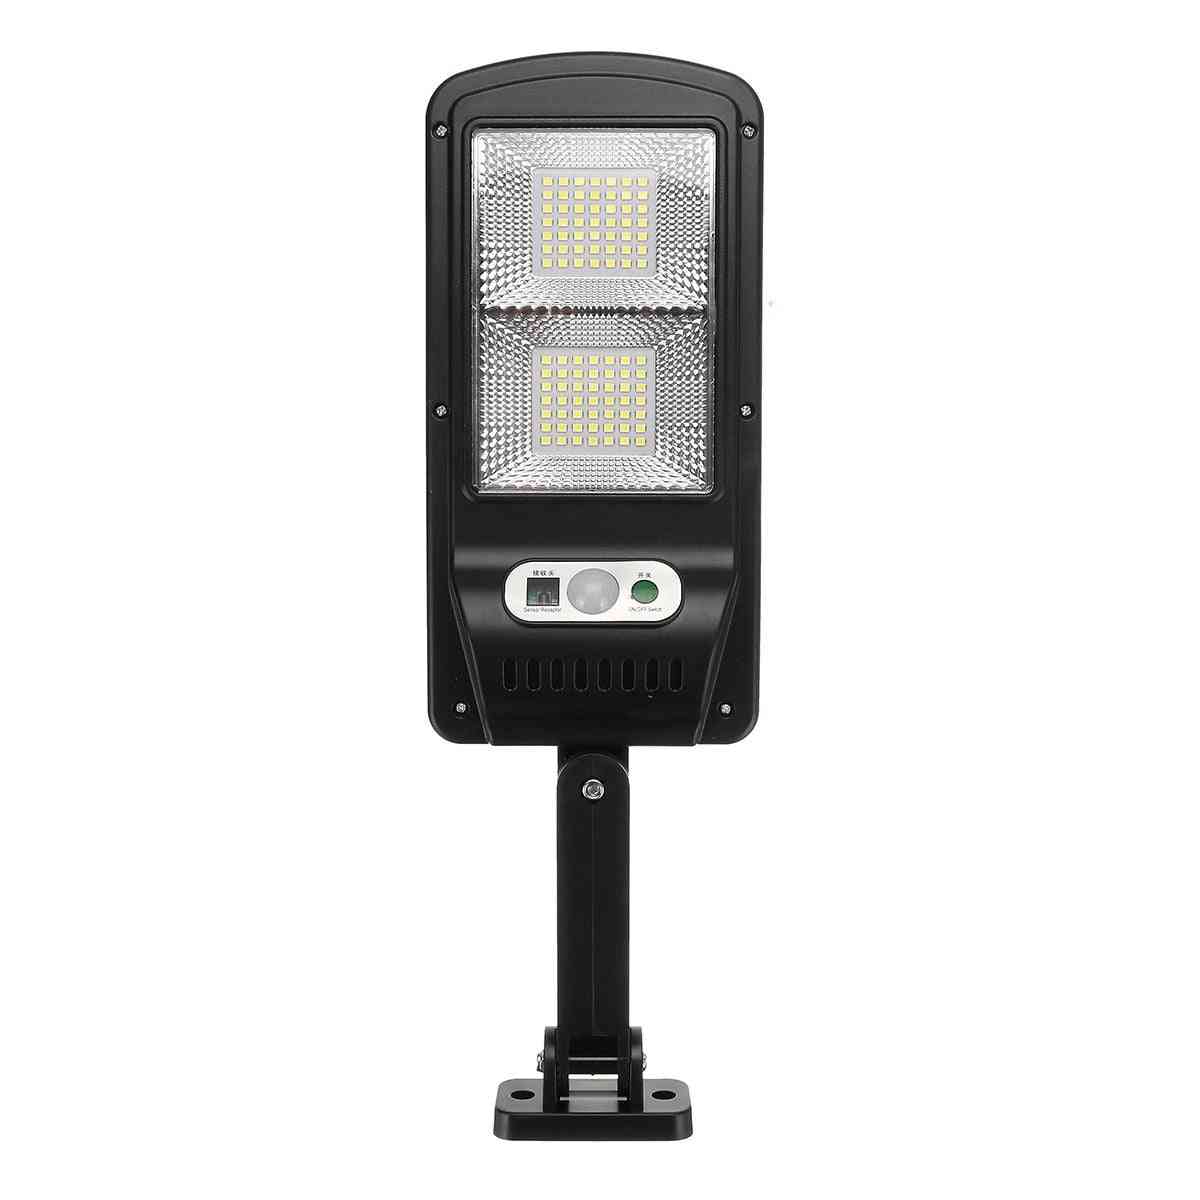 Led Solar Street Lights - Outdoor Security Lighting Wall Lamp, Waterproof Motion Pir Sensor Smart Control